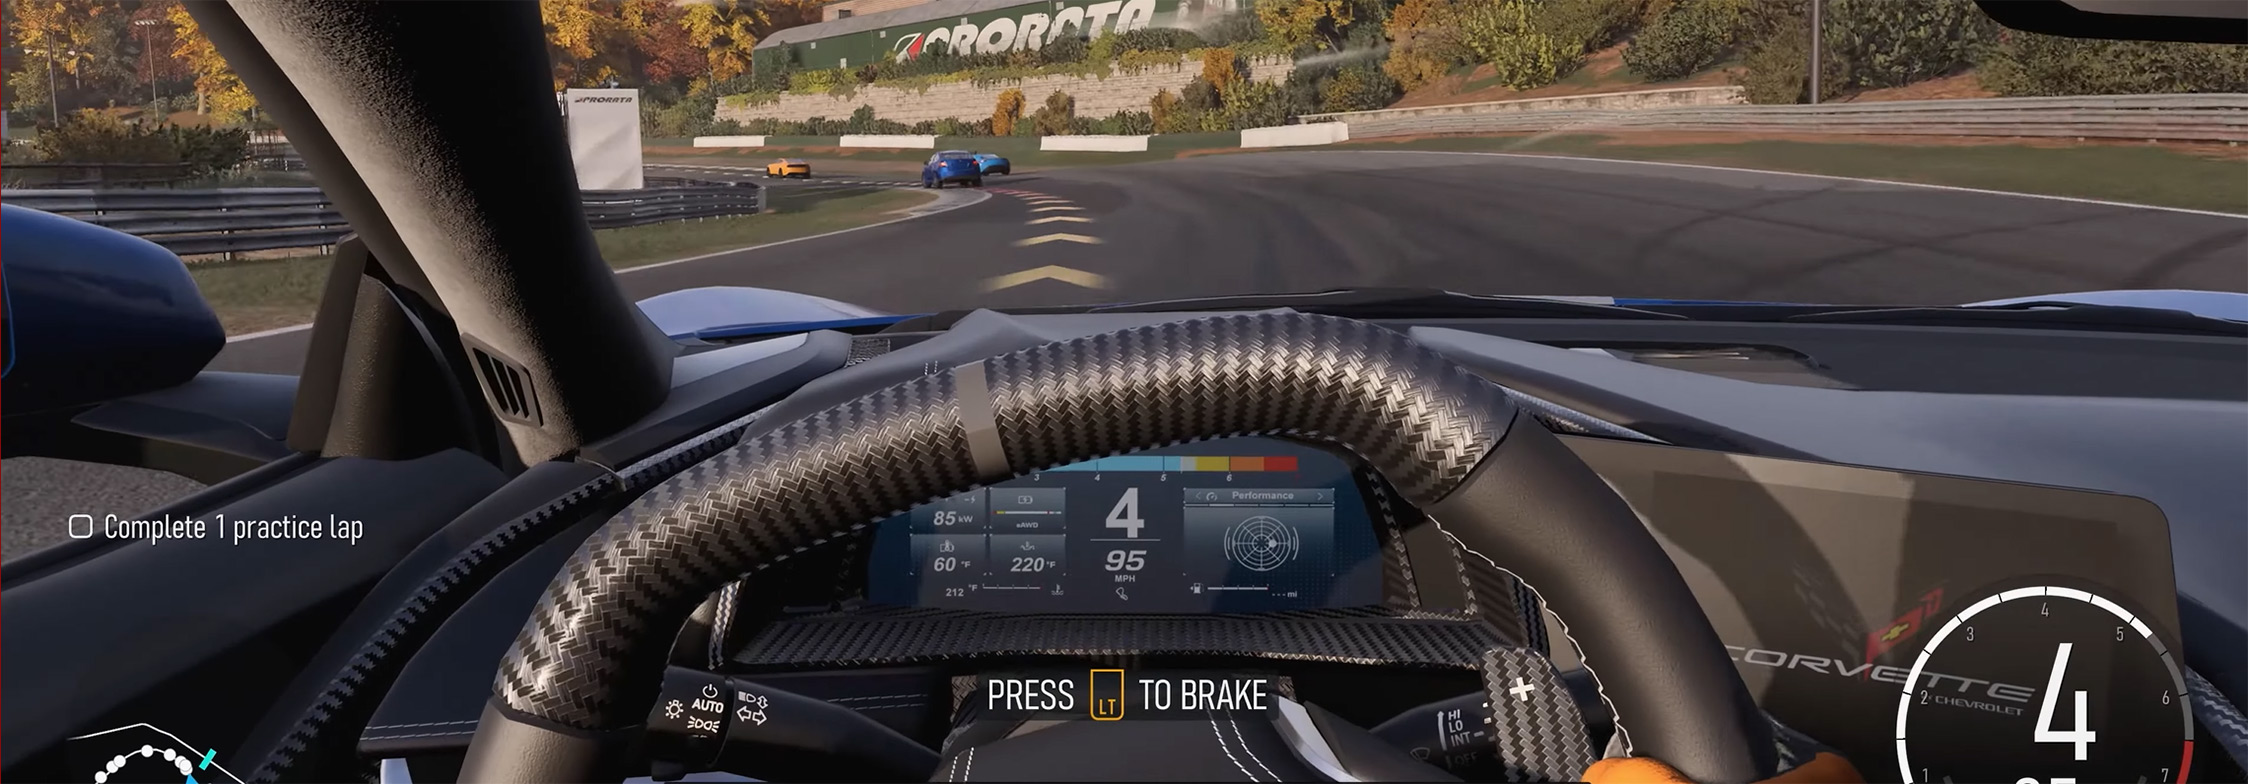 Forza Horizon 3 Review – Capsule Computers